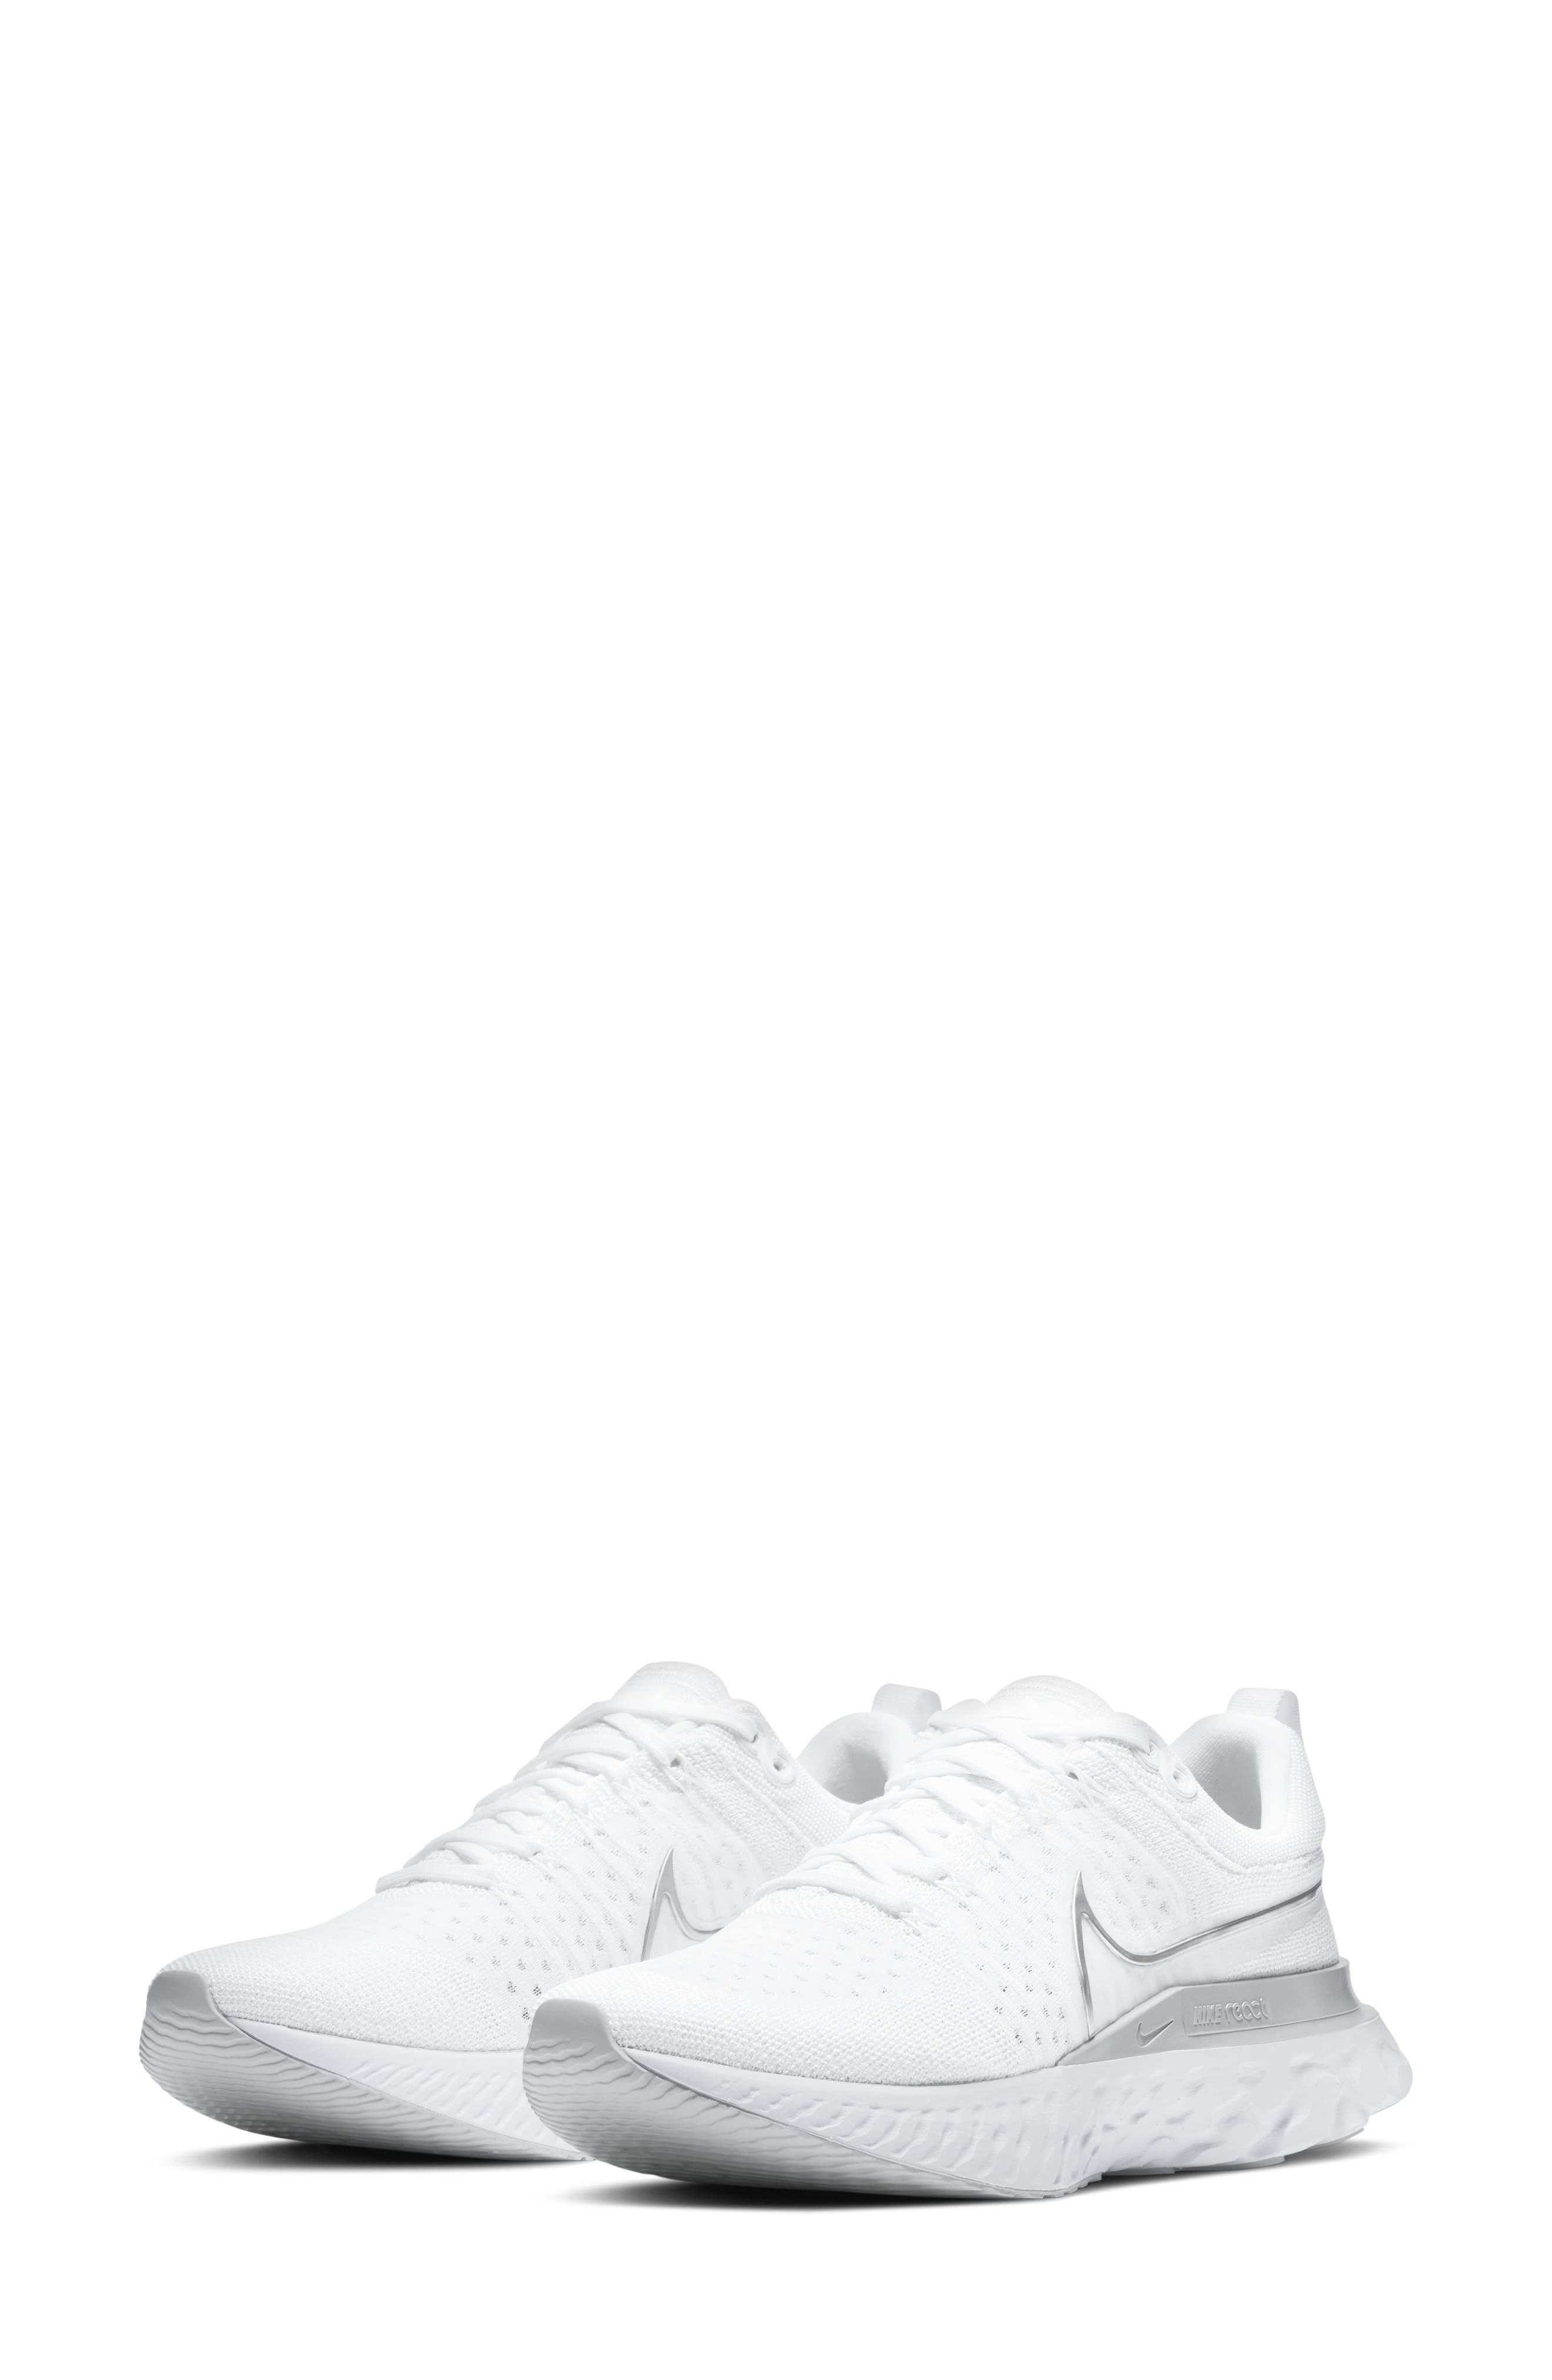 all white tennis shoes women